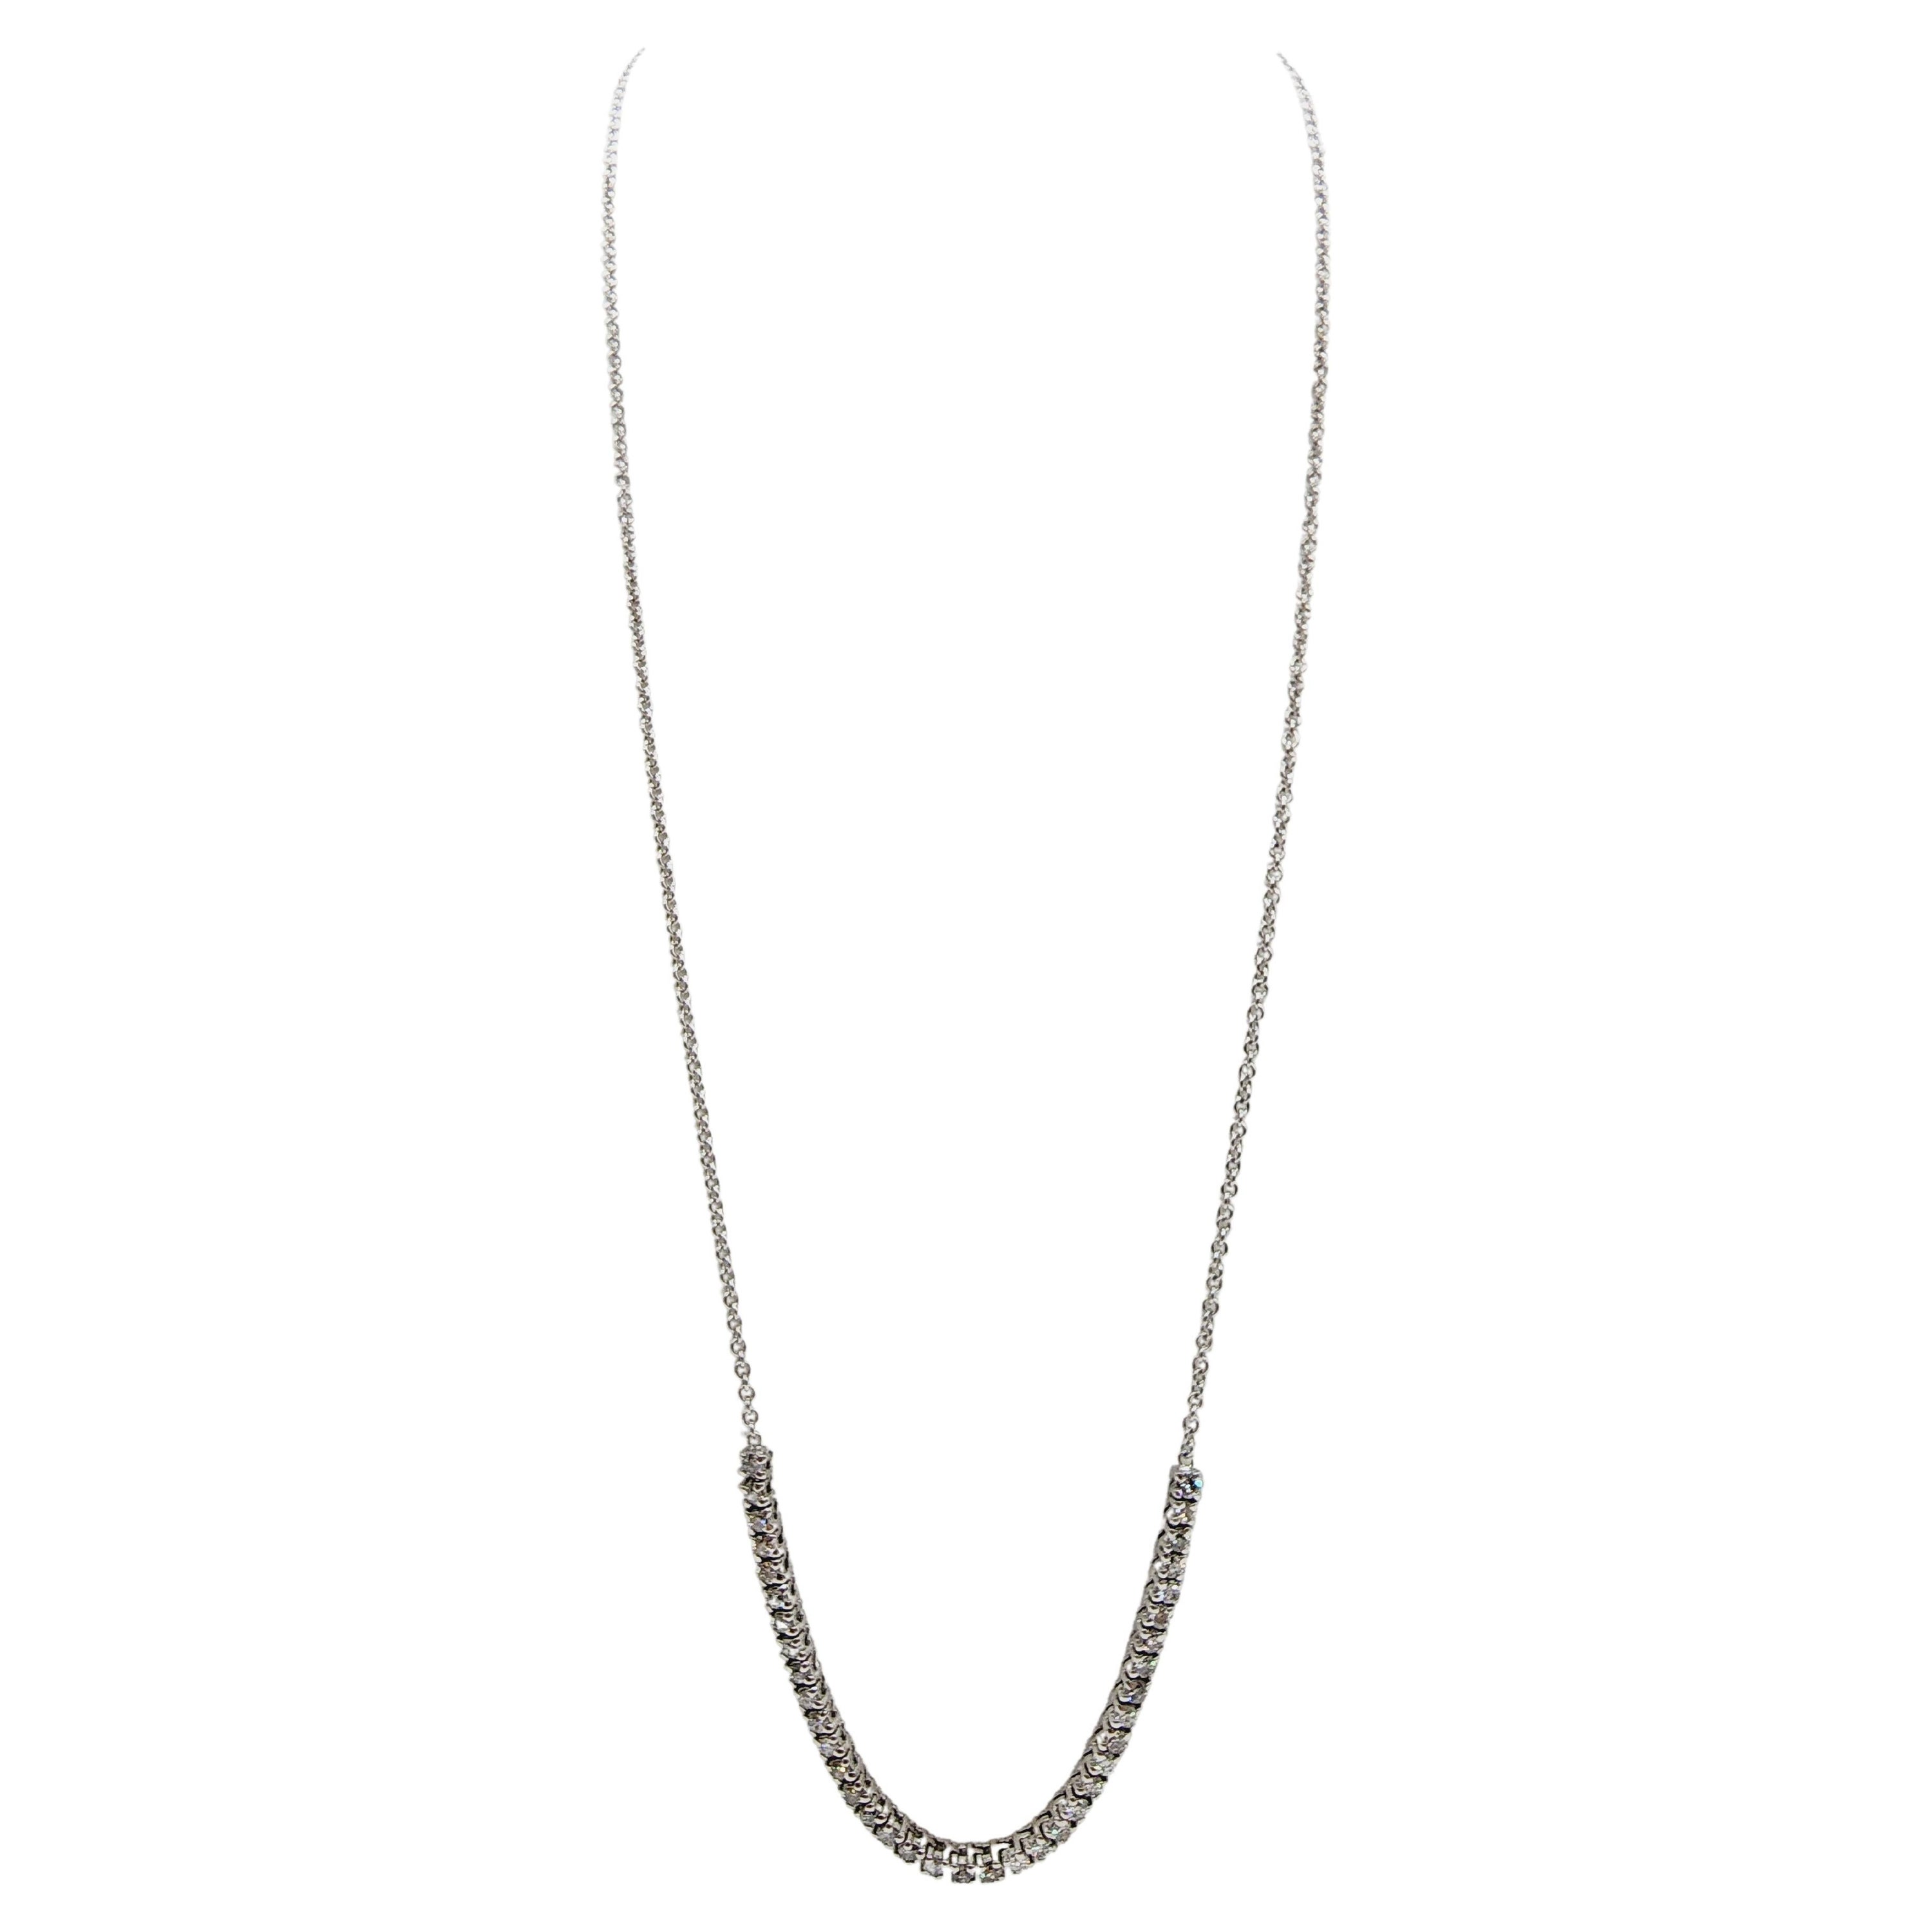 2.16 Carat Natural Round Diamond Mini Tennis Necklace 14 Karat White Gold 24'' (Collier de tennis mini diamant rond naturel)